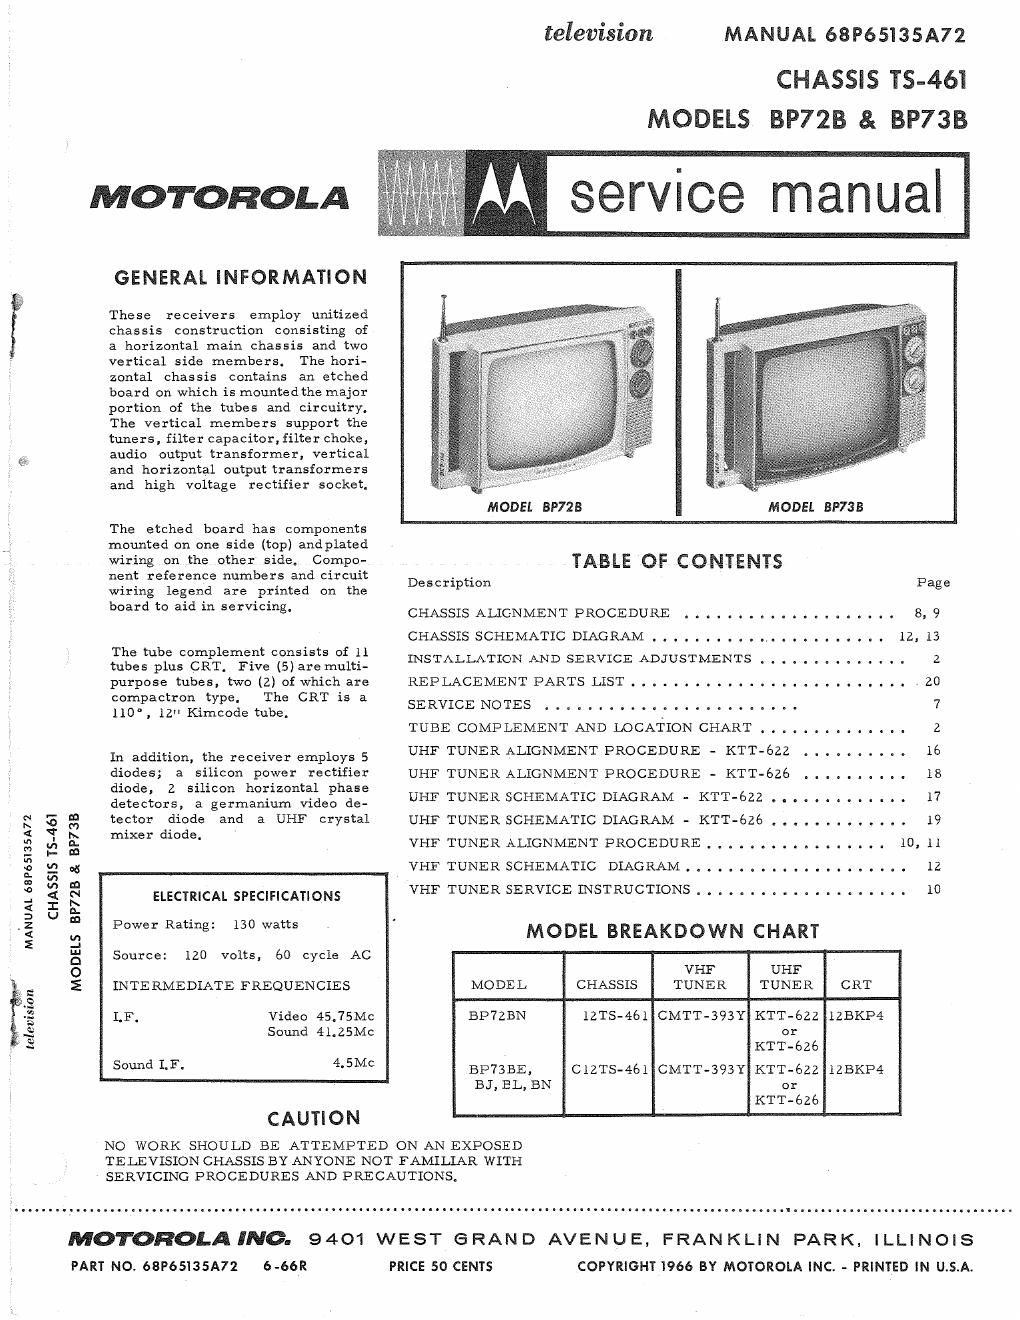 motorola bp 72 b service manual